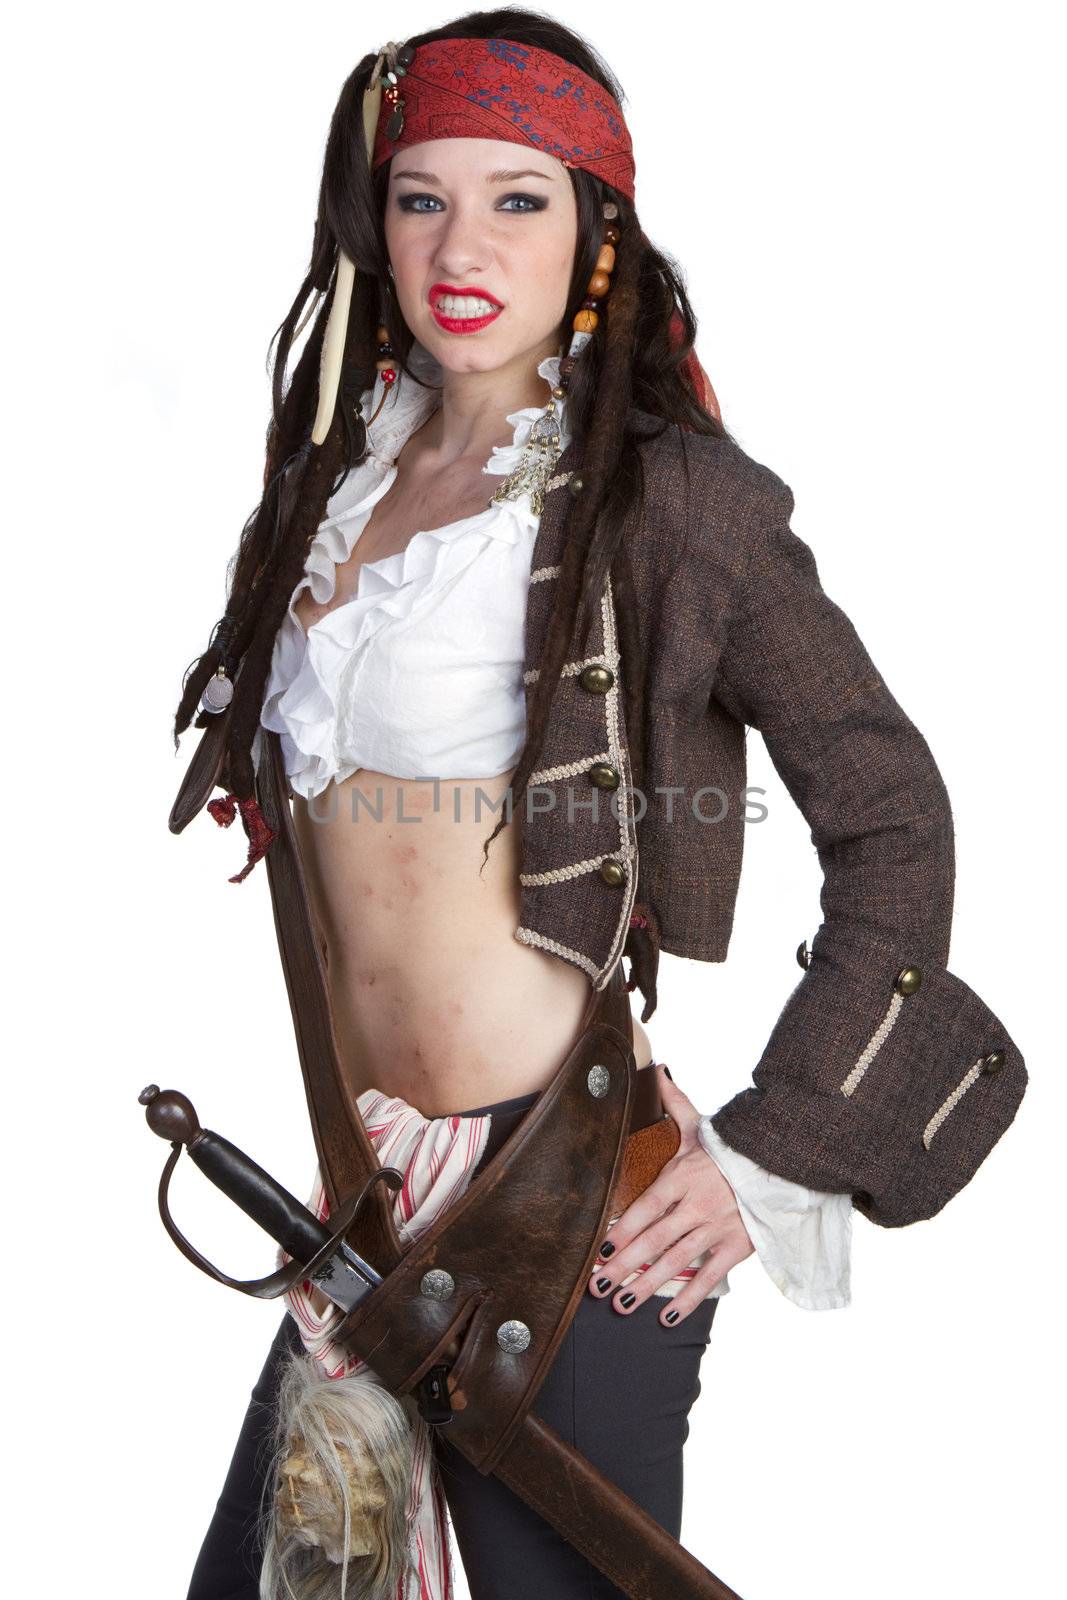 Pirate Woman by keeweeboy